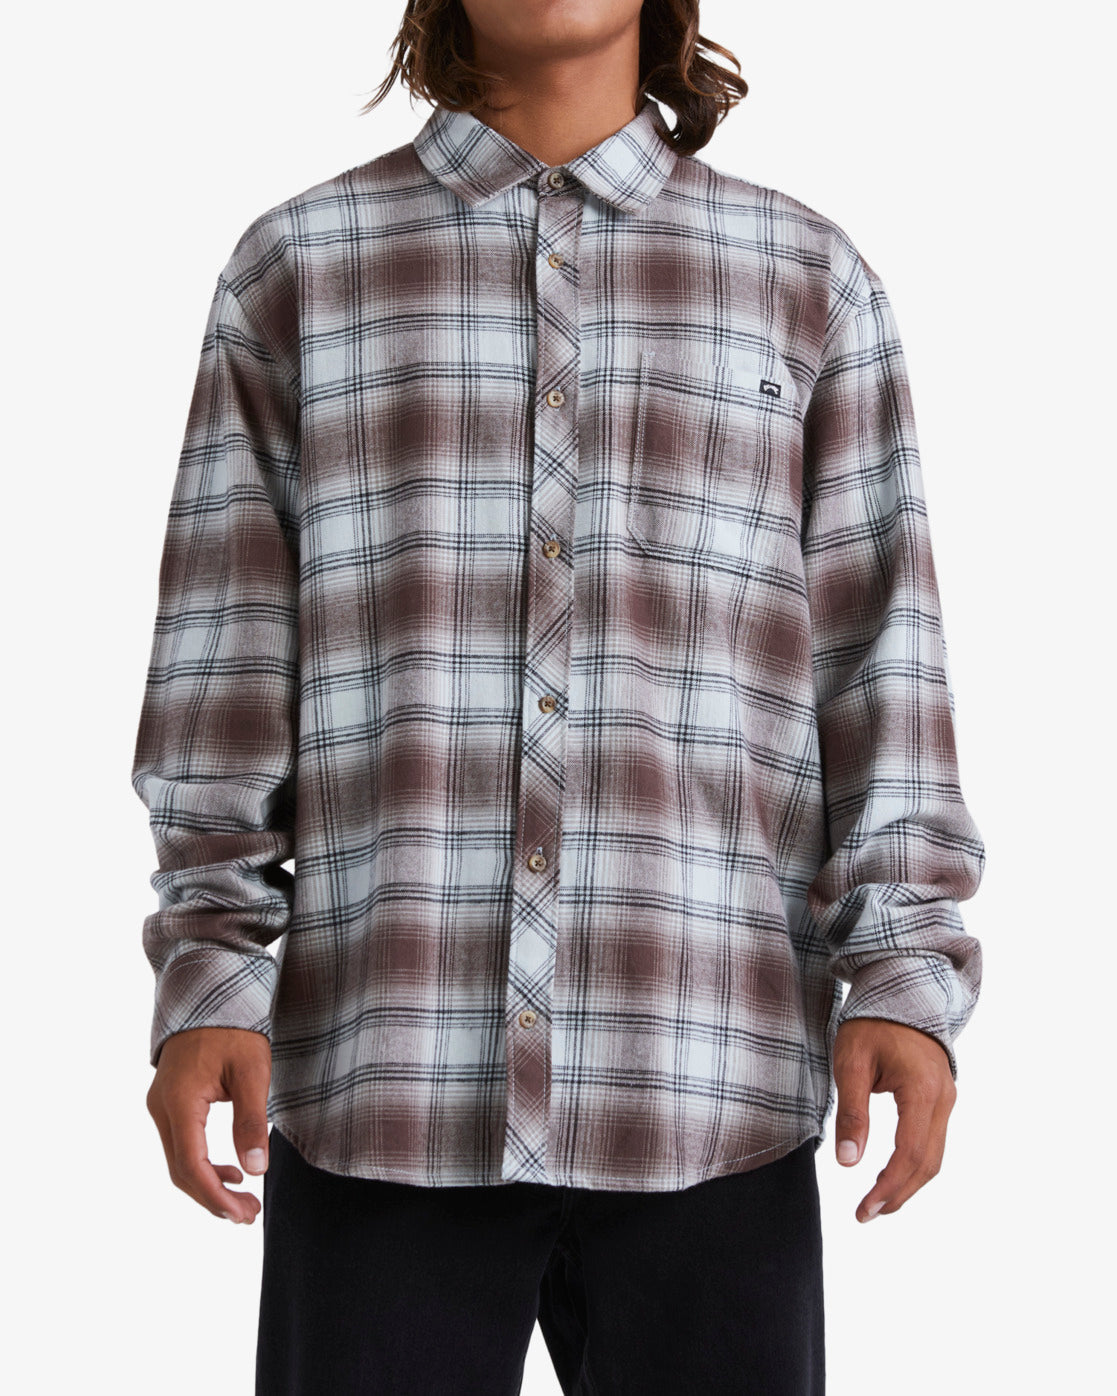 Coastline Flannel Shirt